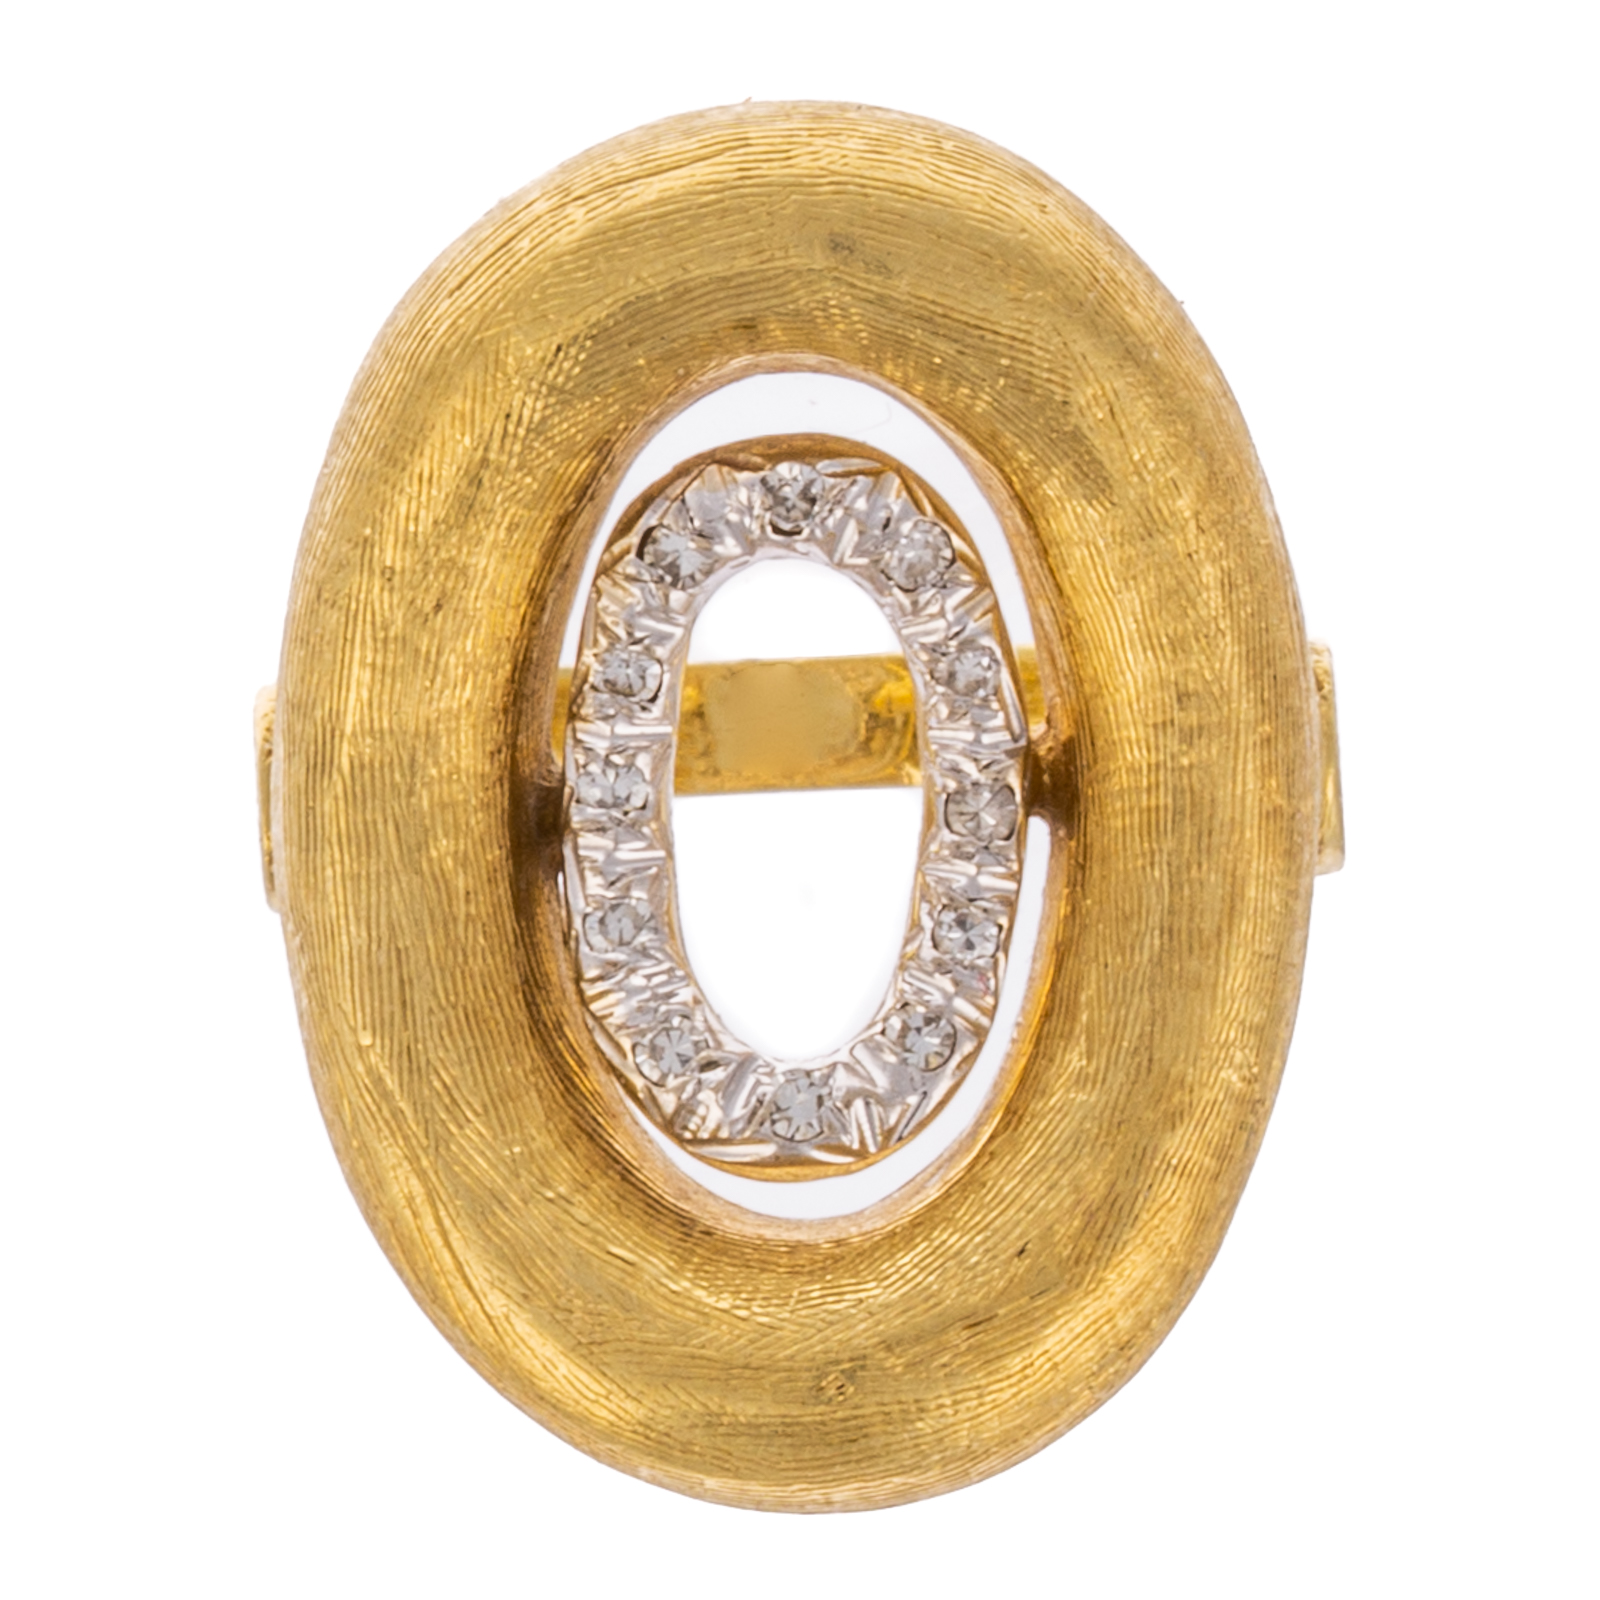 A DIAMOND FLORENTINE FINISH RING 287917